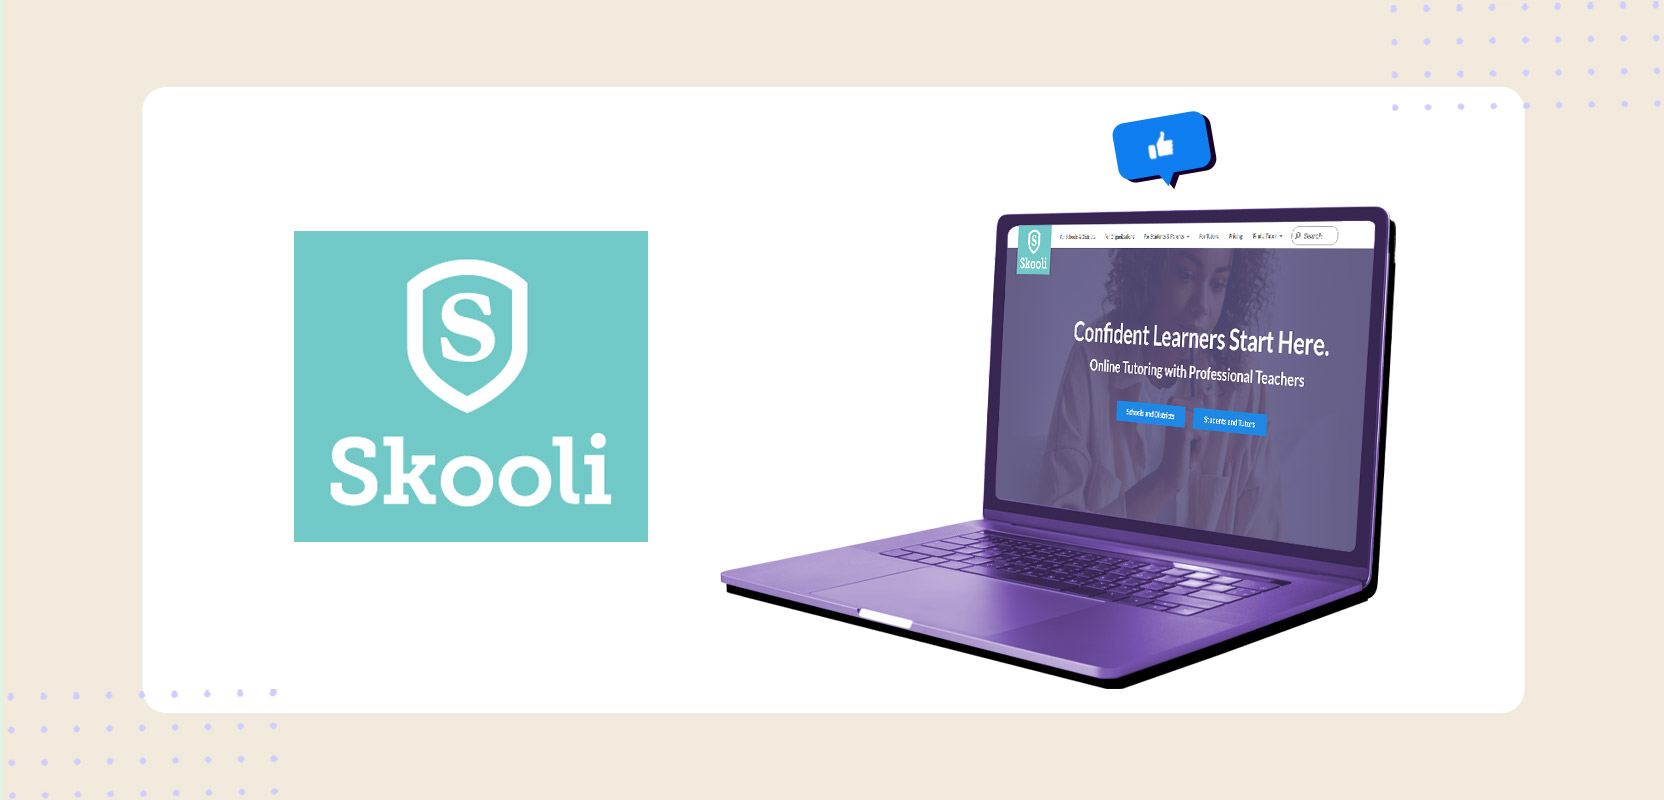 Laptop screen showing the Skooli website